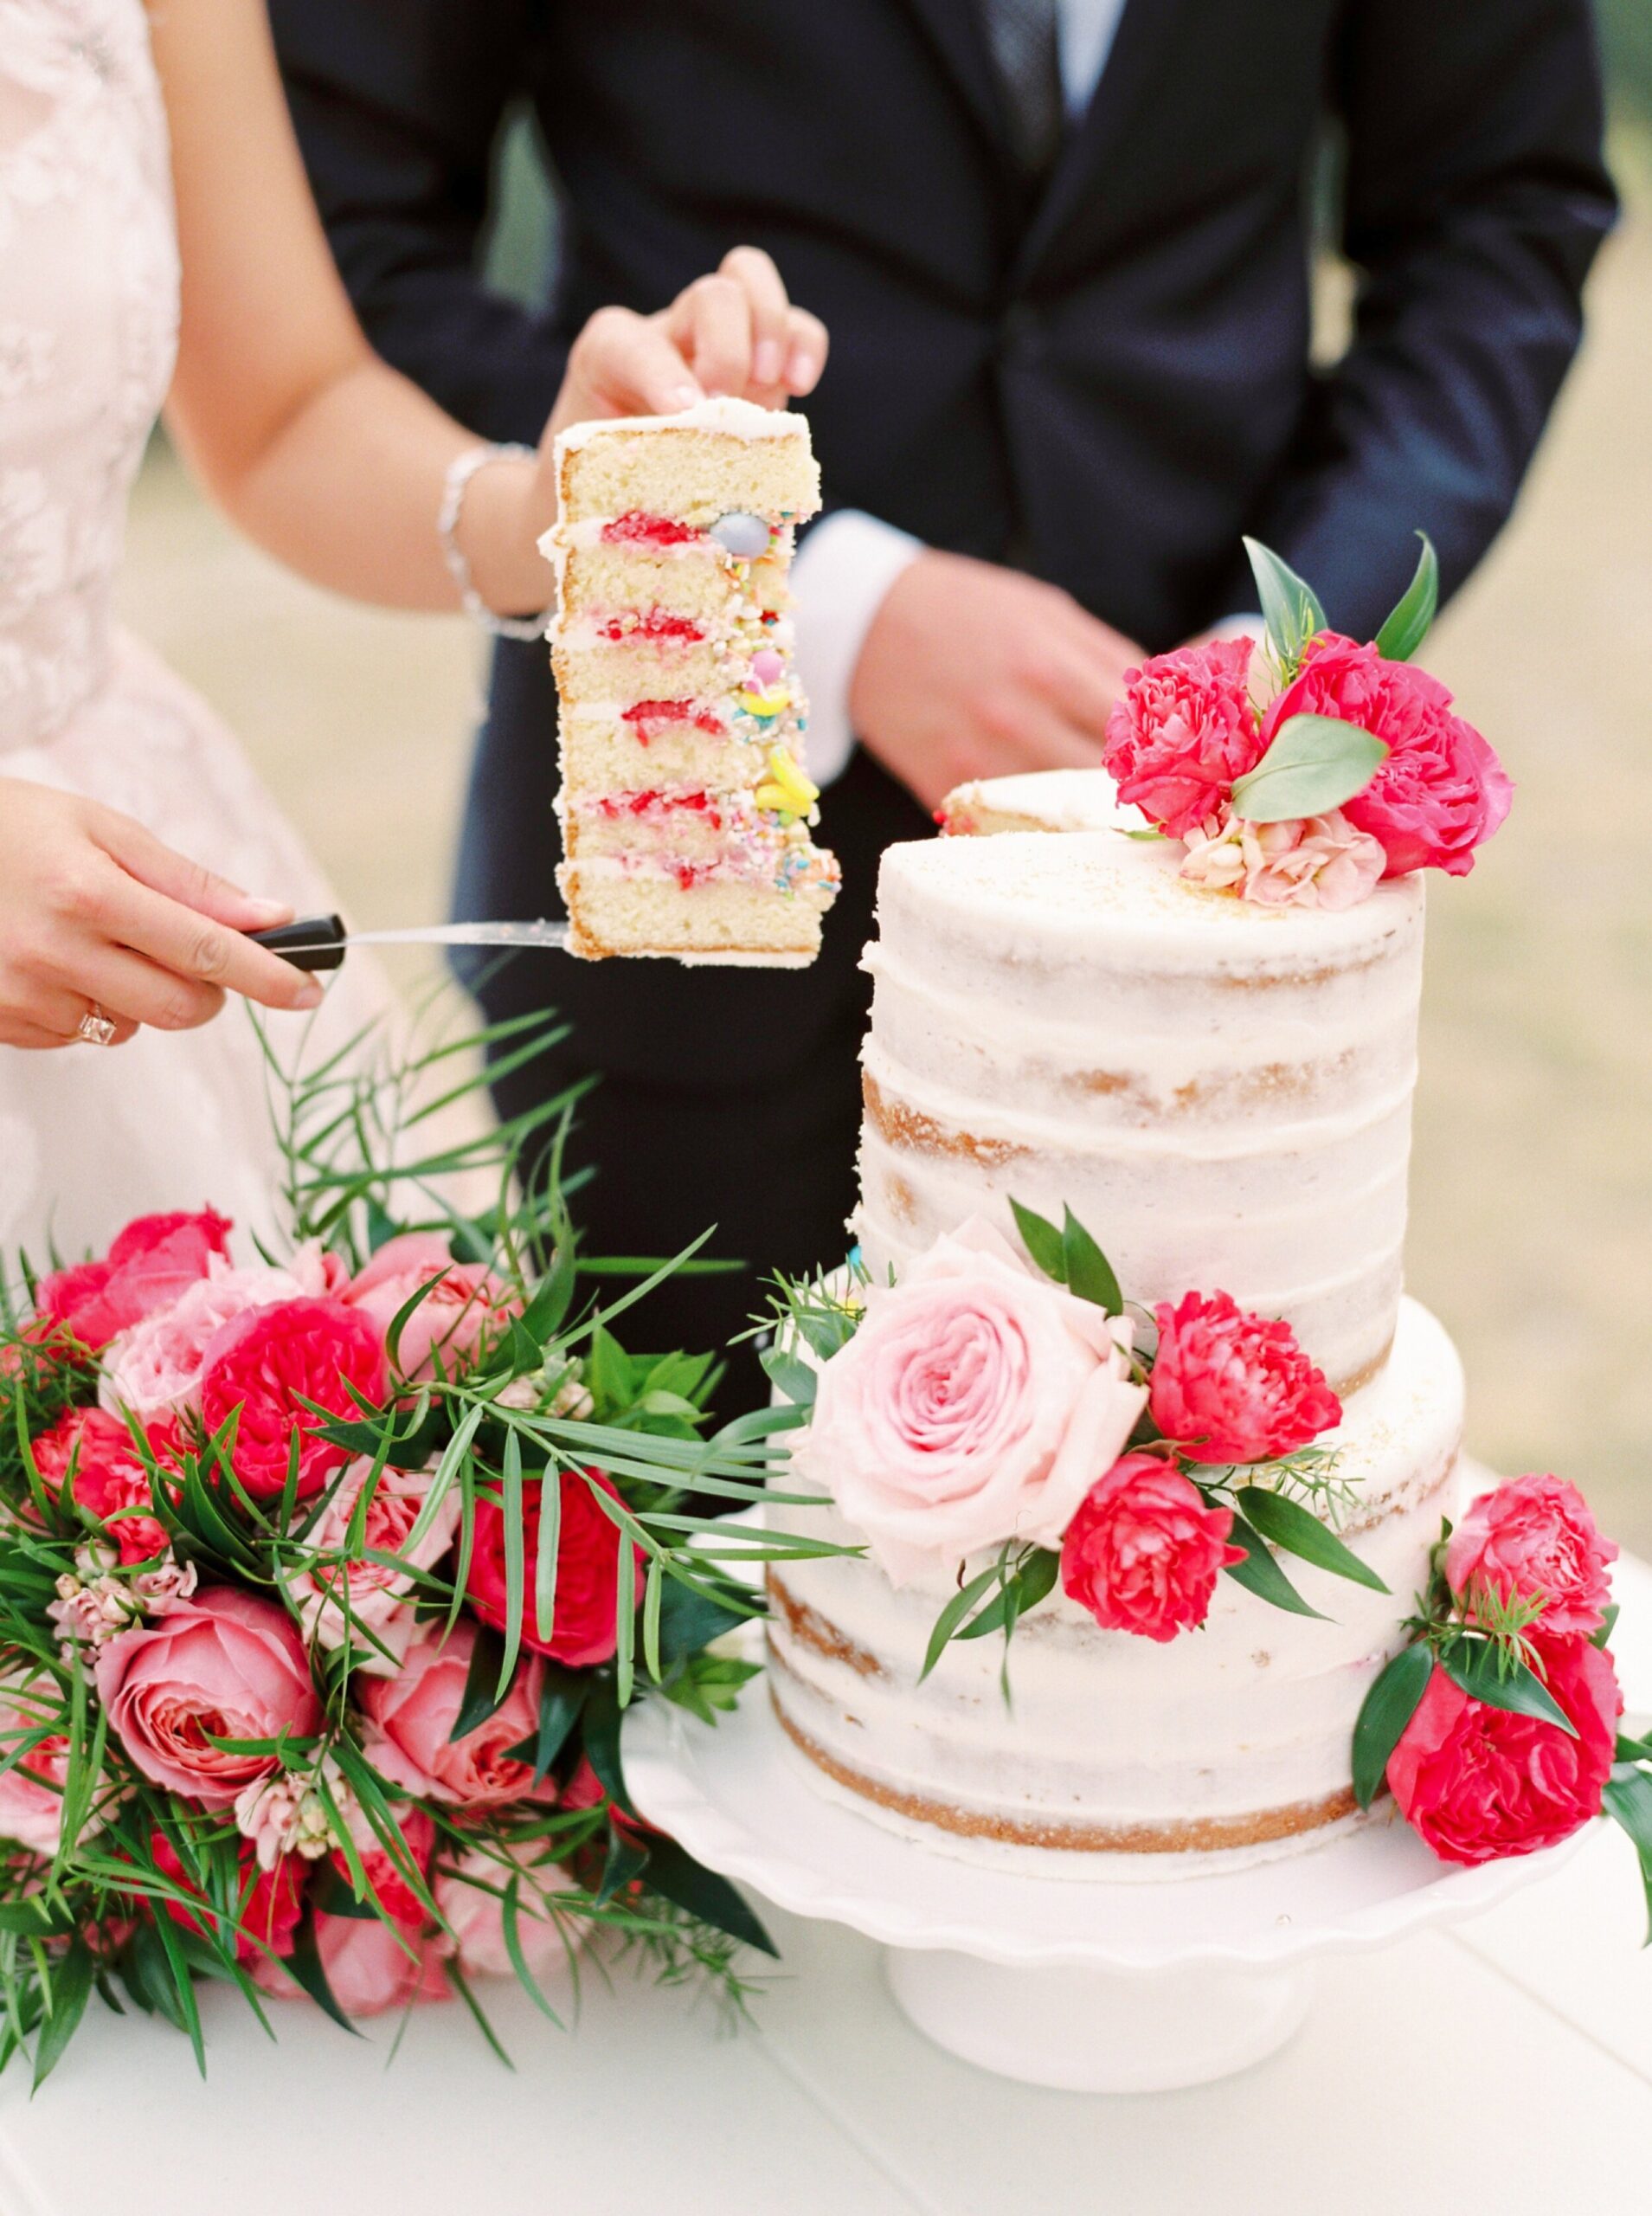  Banff wedding photographer | intimate wedding elopement | wedding cake | bride and groom cutting cake | justine milton photography 